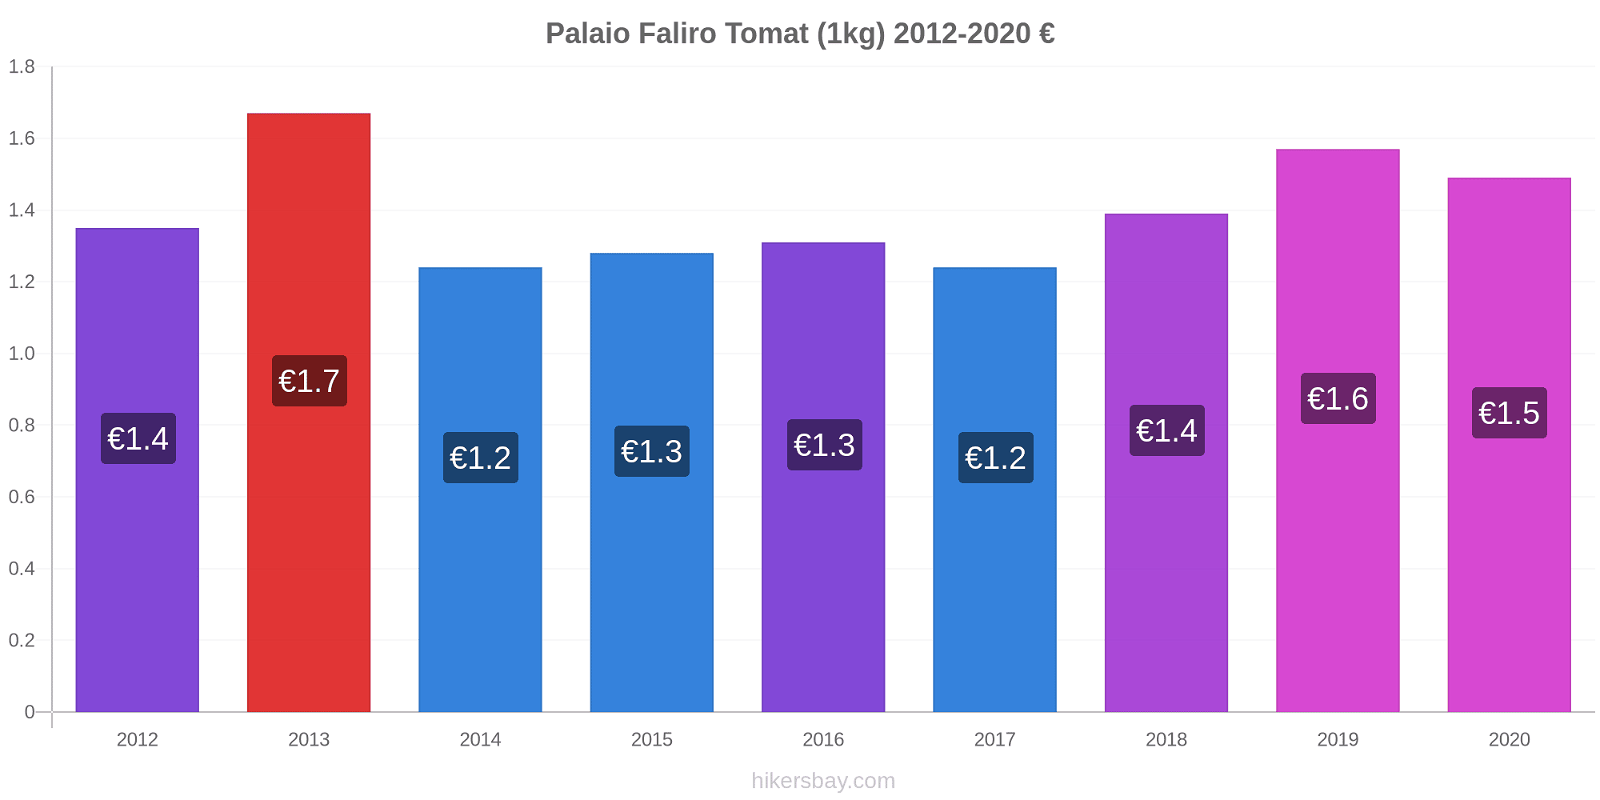 Palaio Faliro prisendringer Tomat (1kg) hikersbay.com